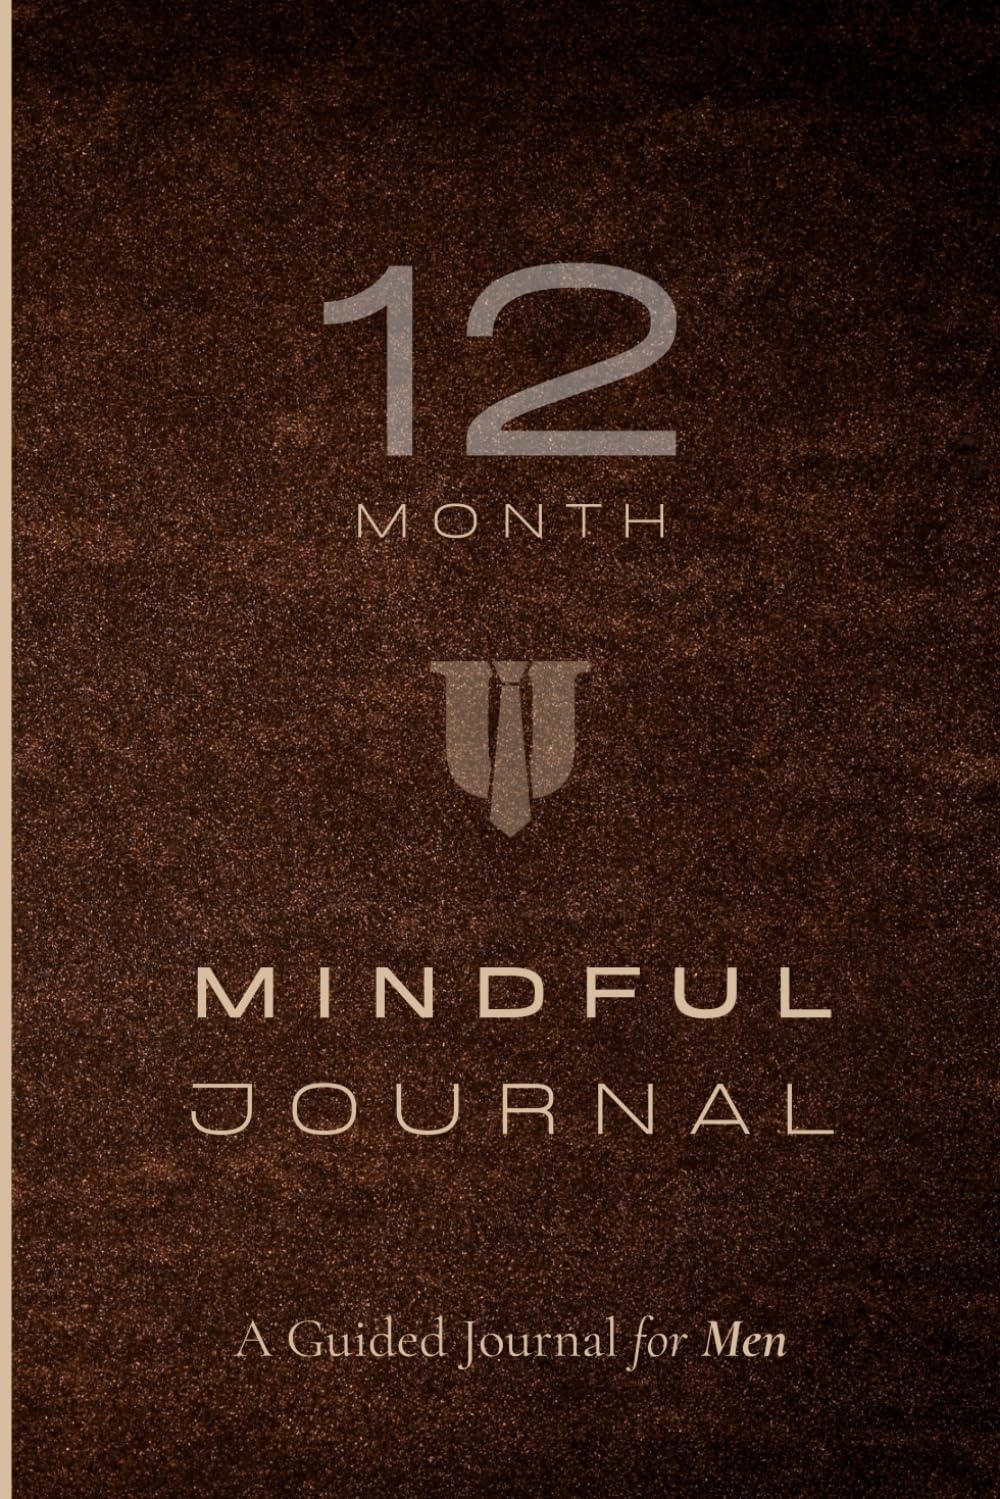 Mindfulness Journal for Men